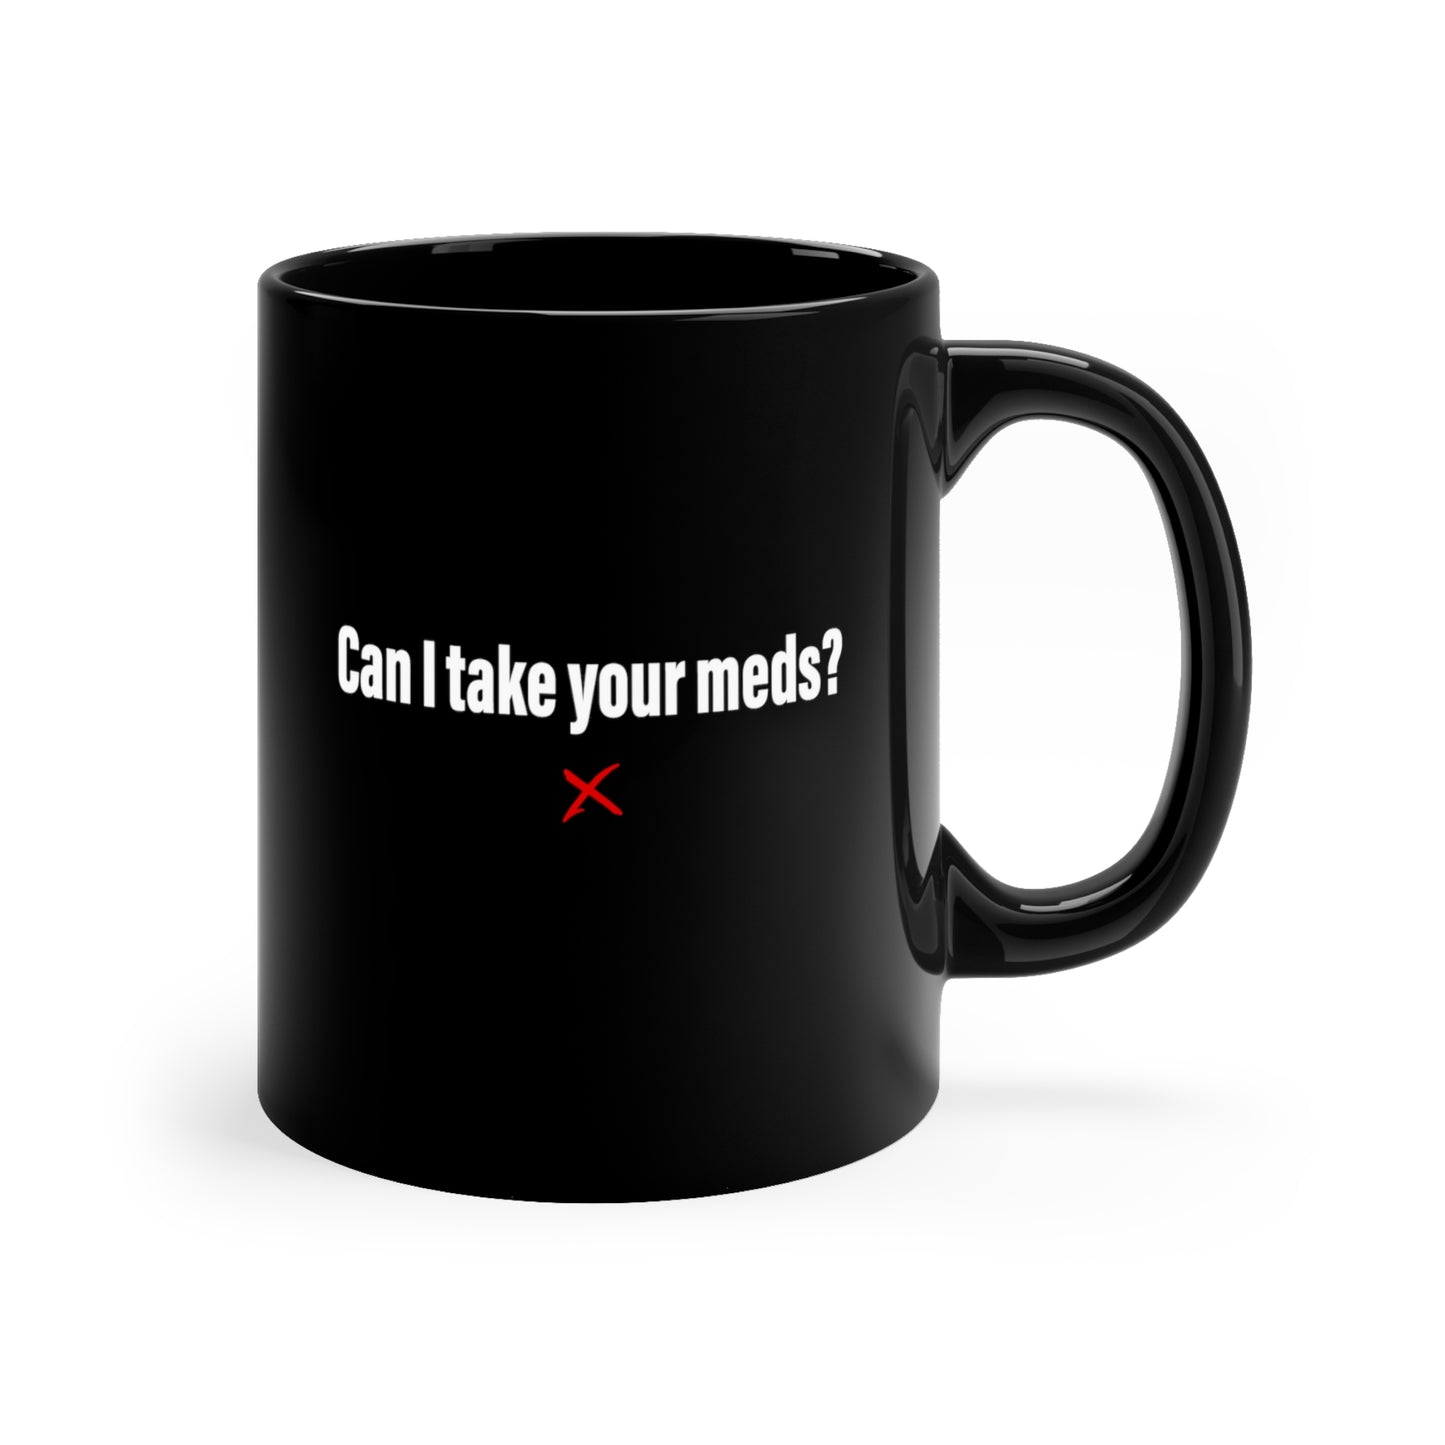 Can I take your meds? - Mug